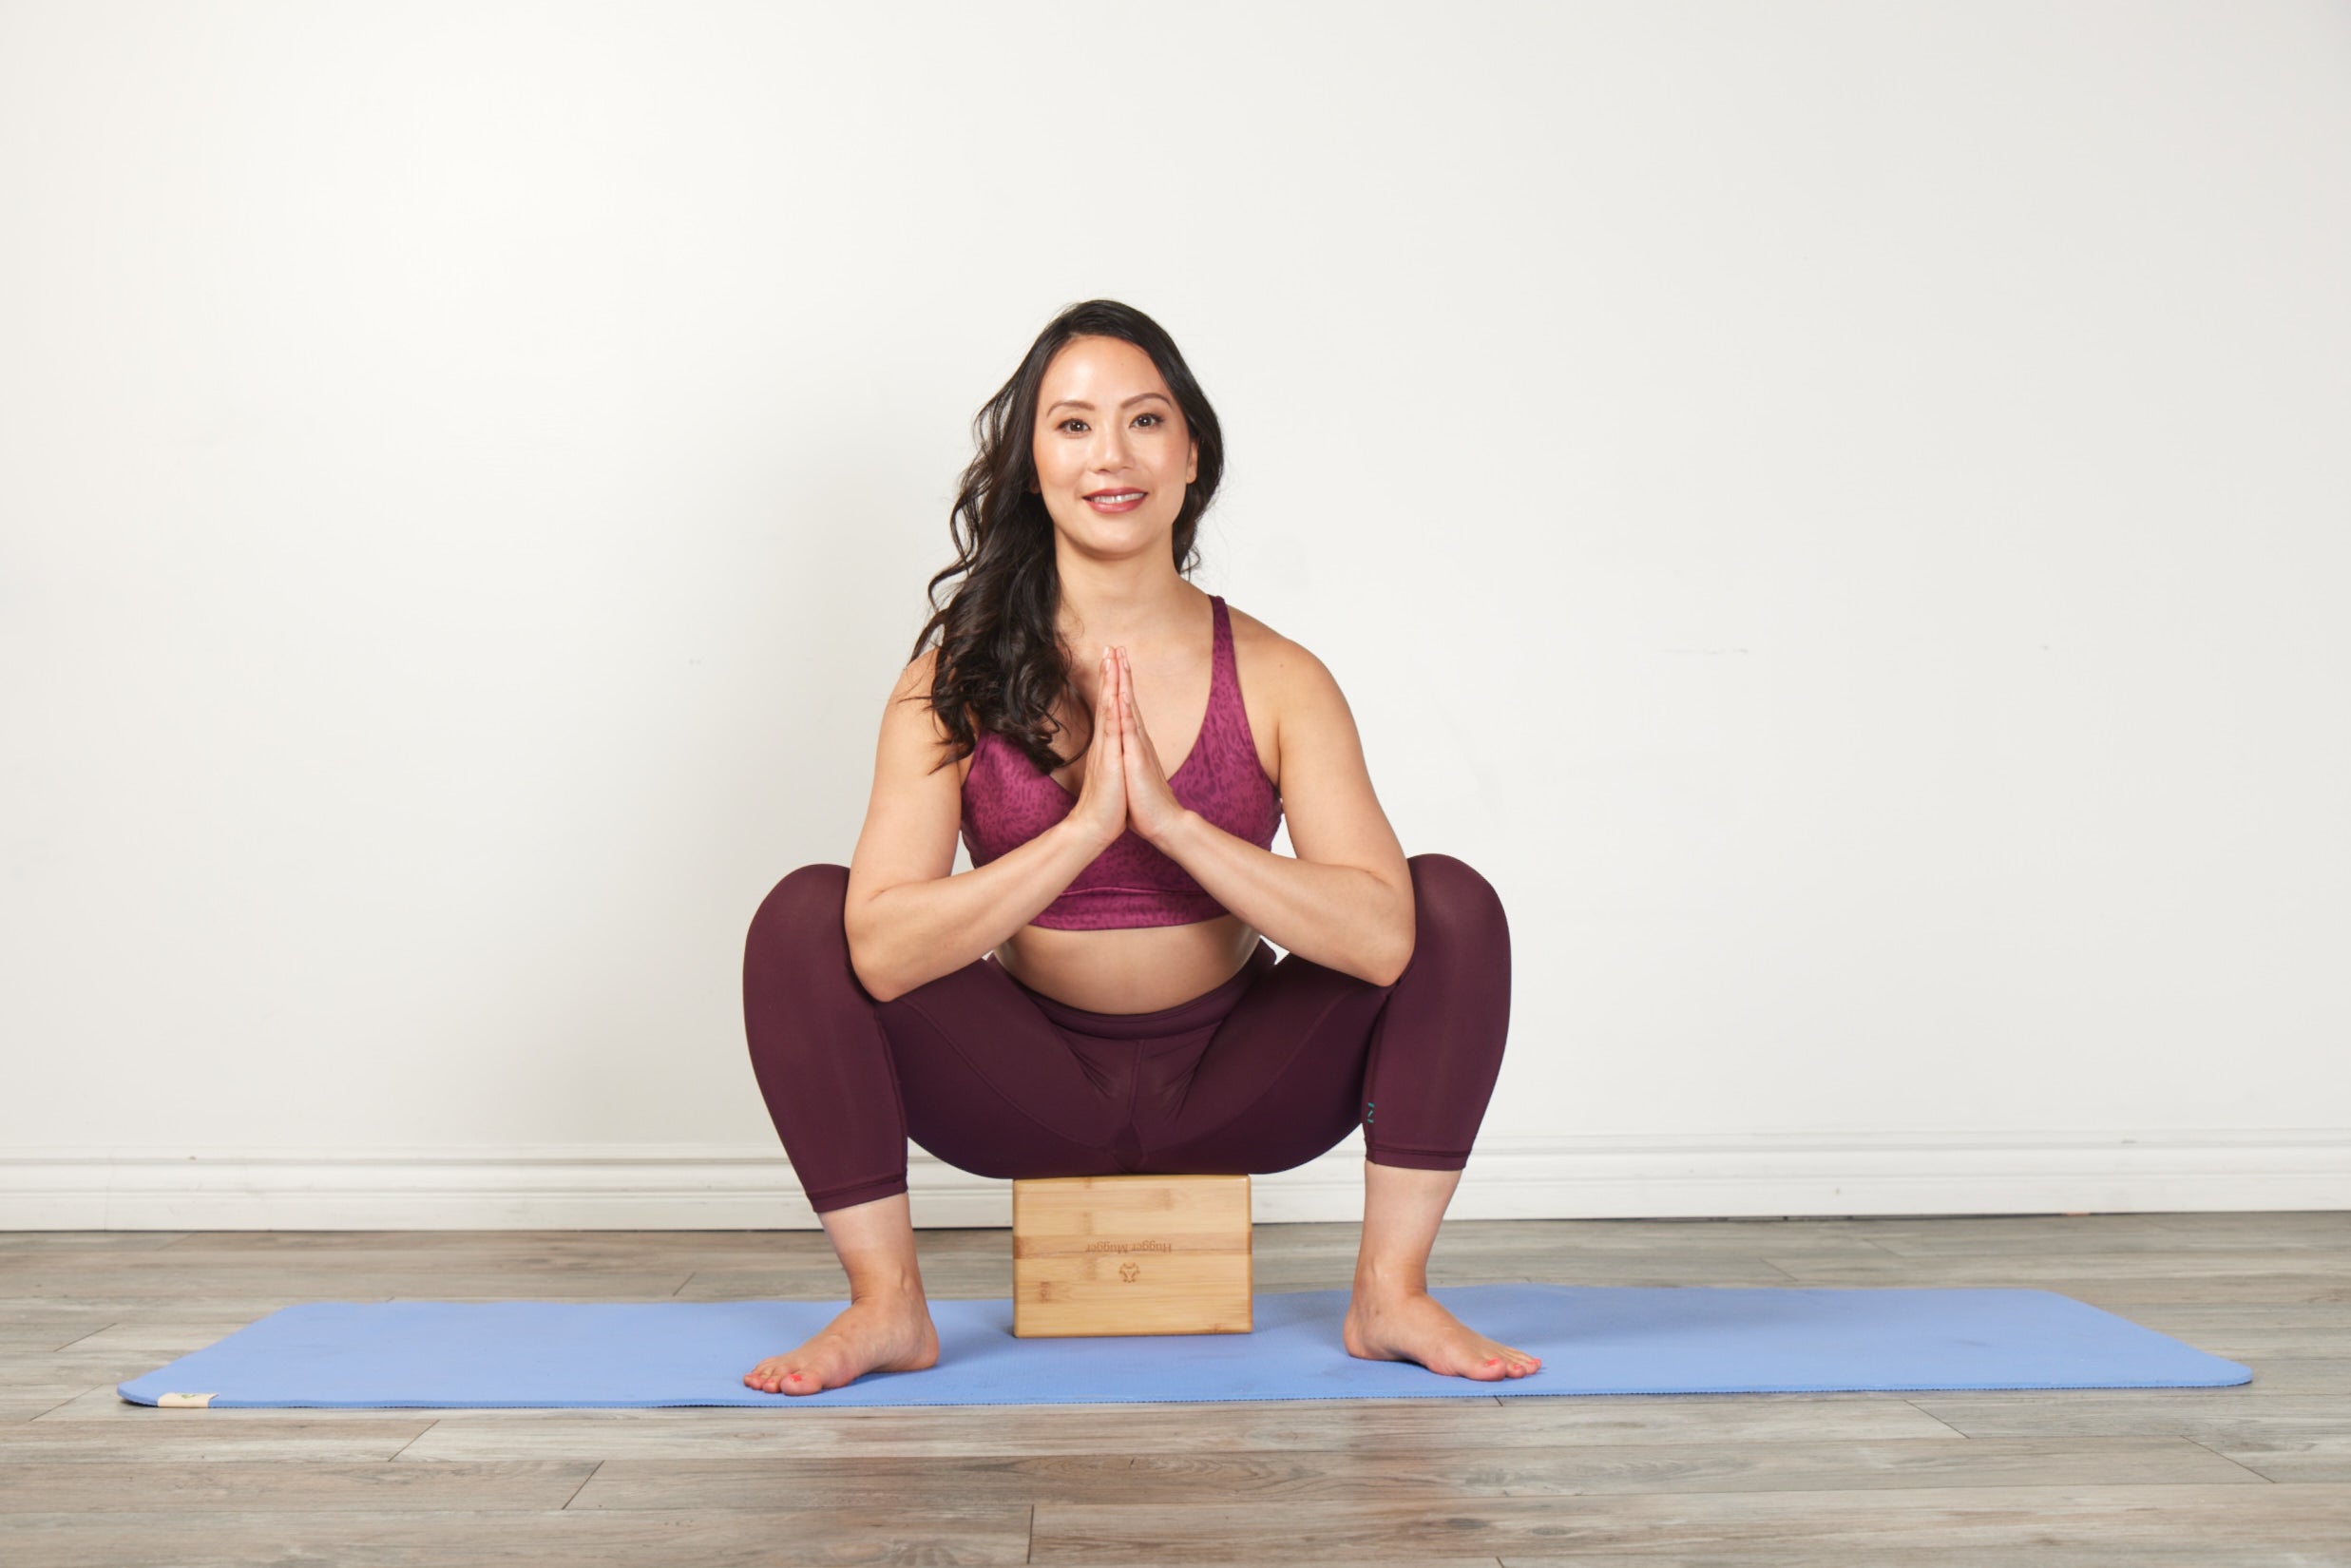 8 Health Benefits Of Morning Yoga Practice - PharmEasy Blog